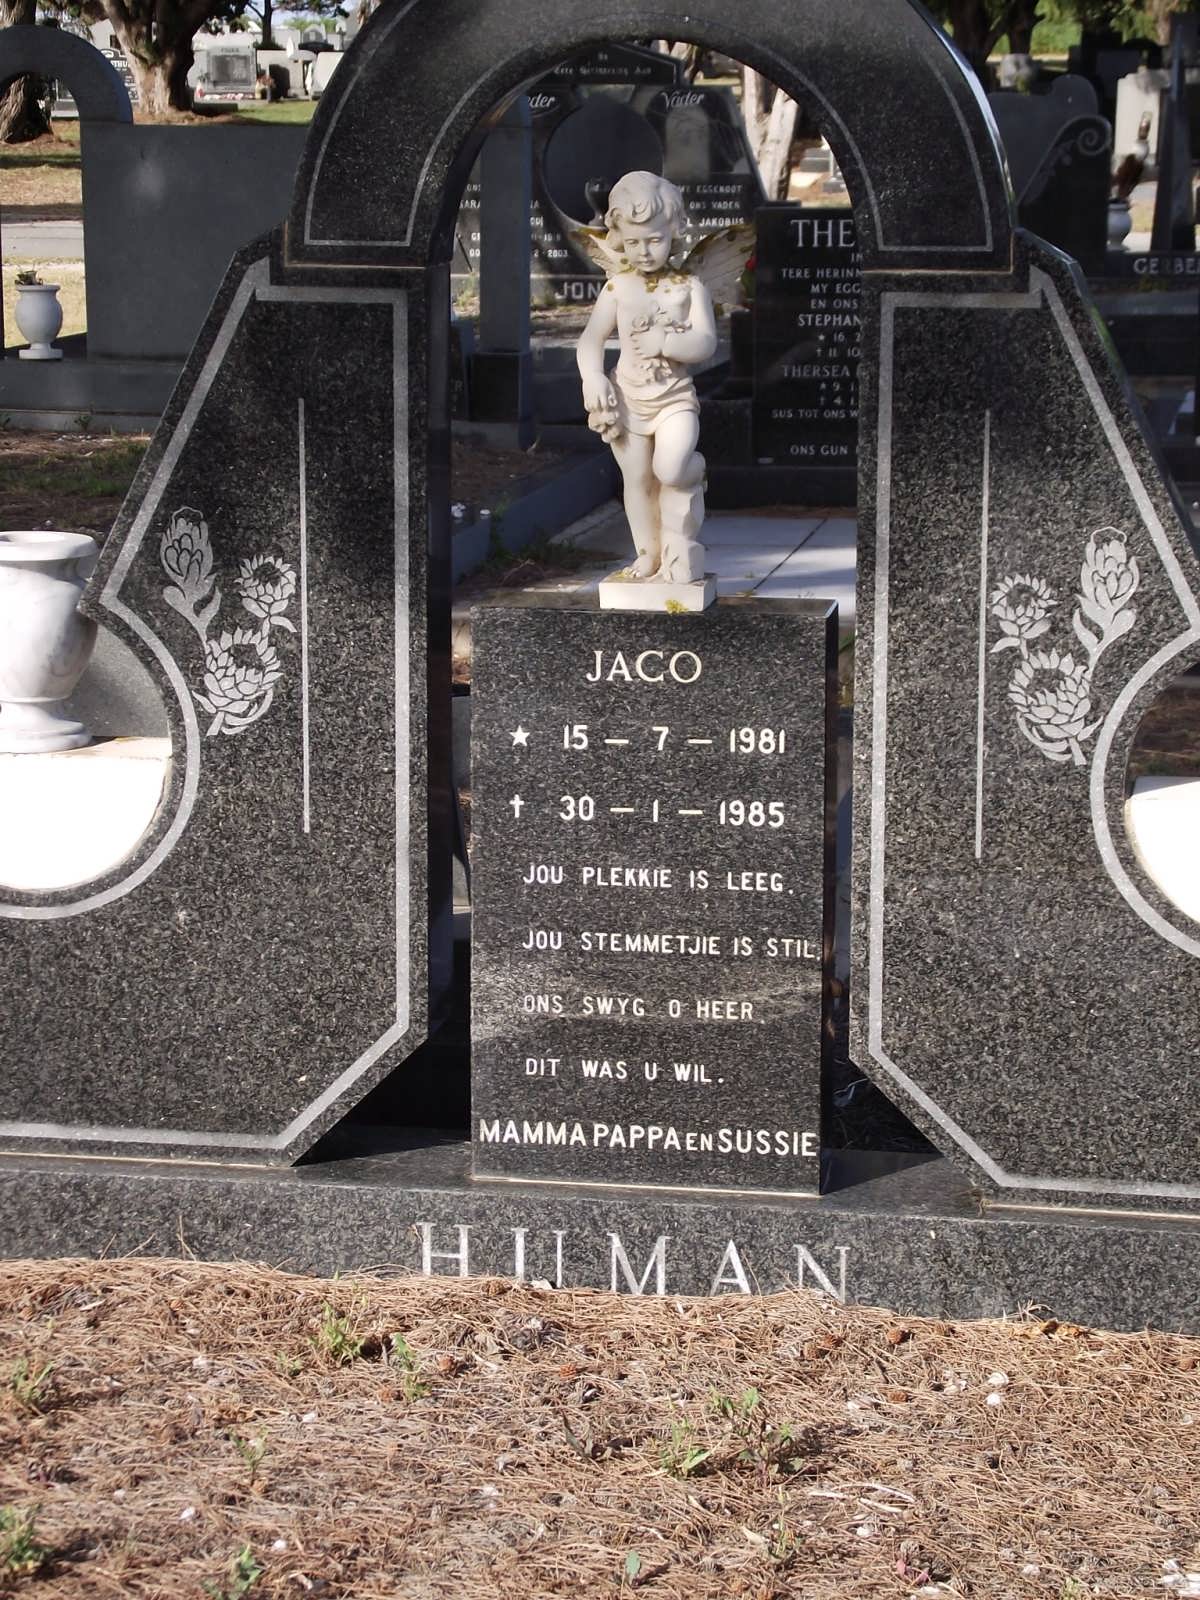 HUMAN Jaco 1981-1985